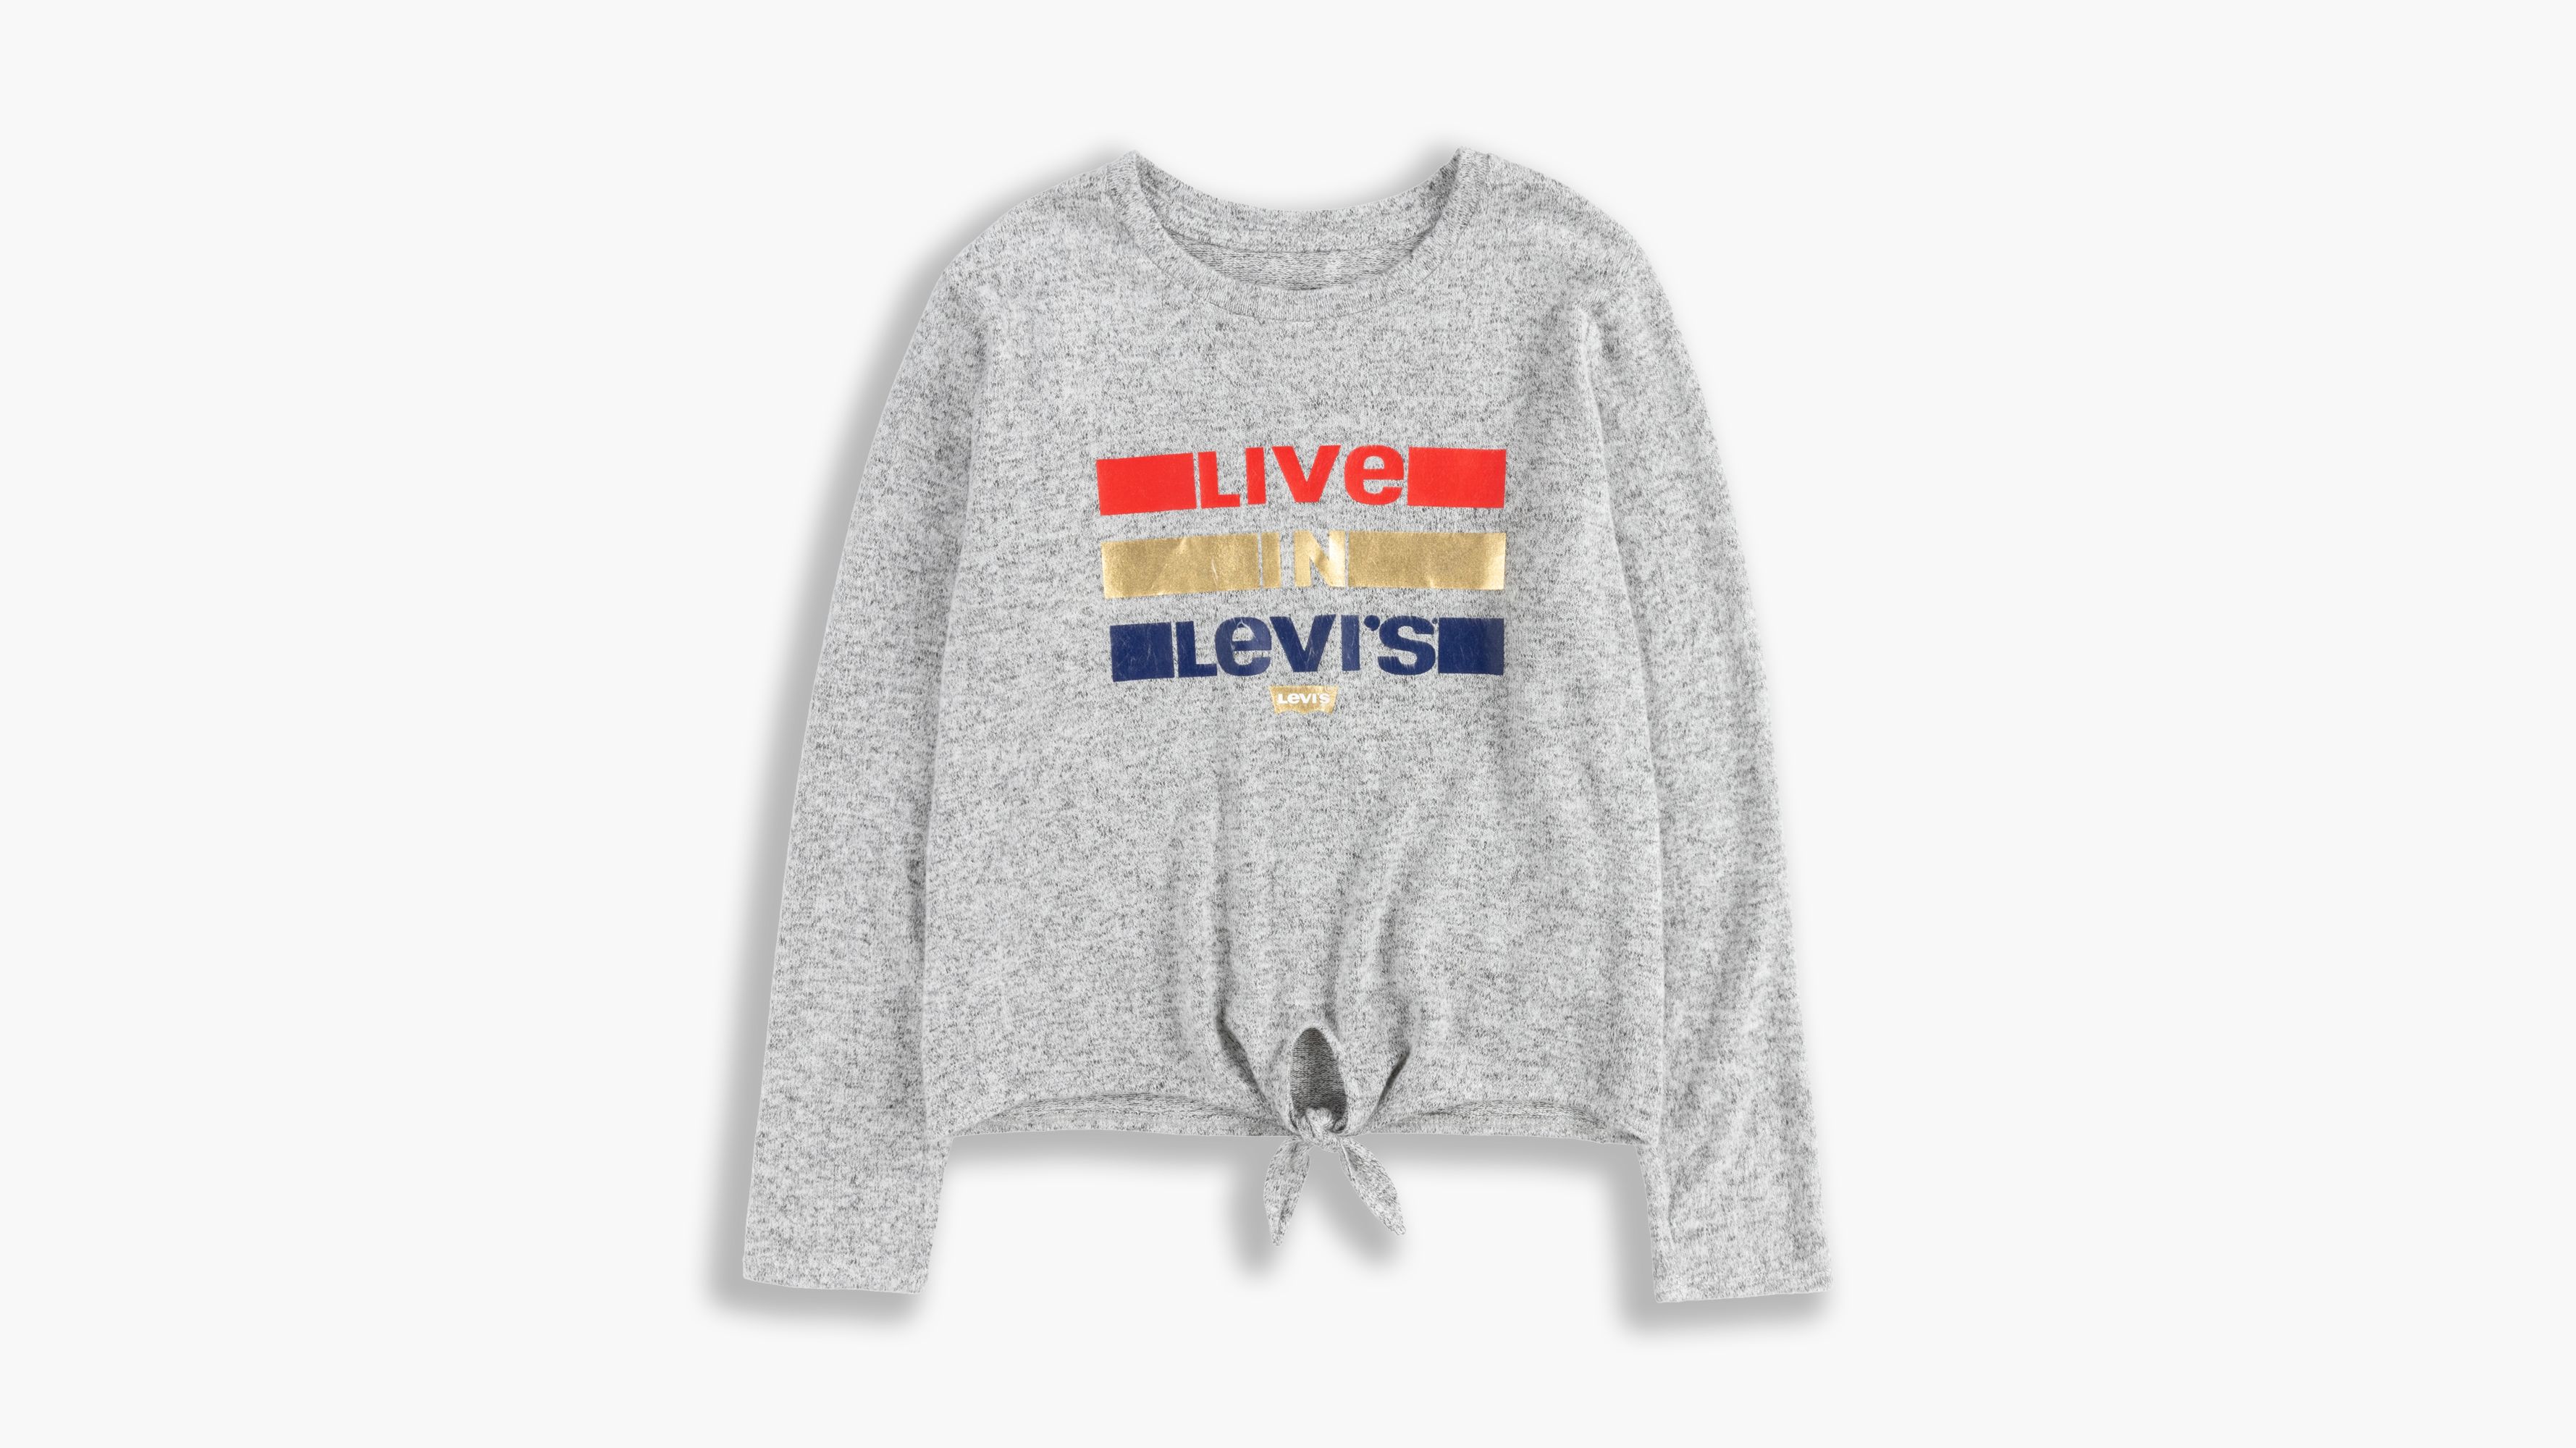 levi children's clothing uk